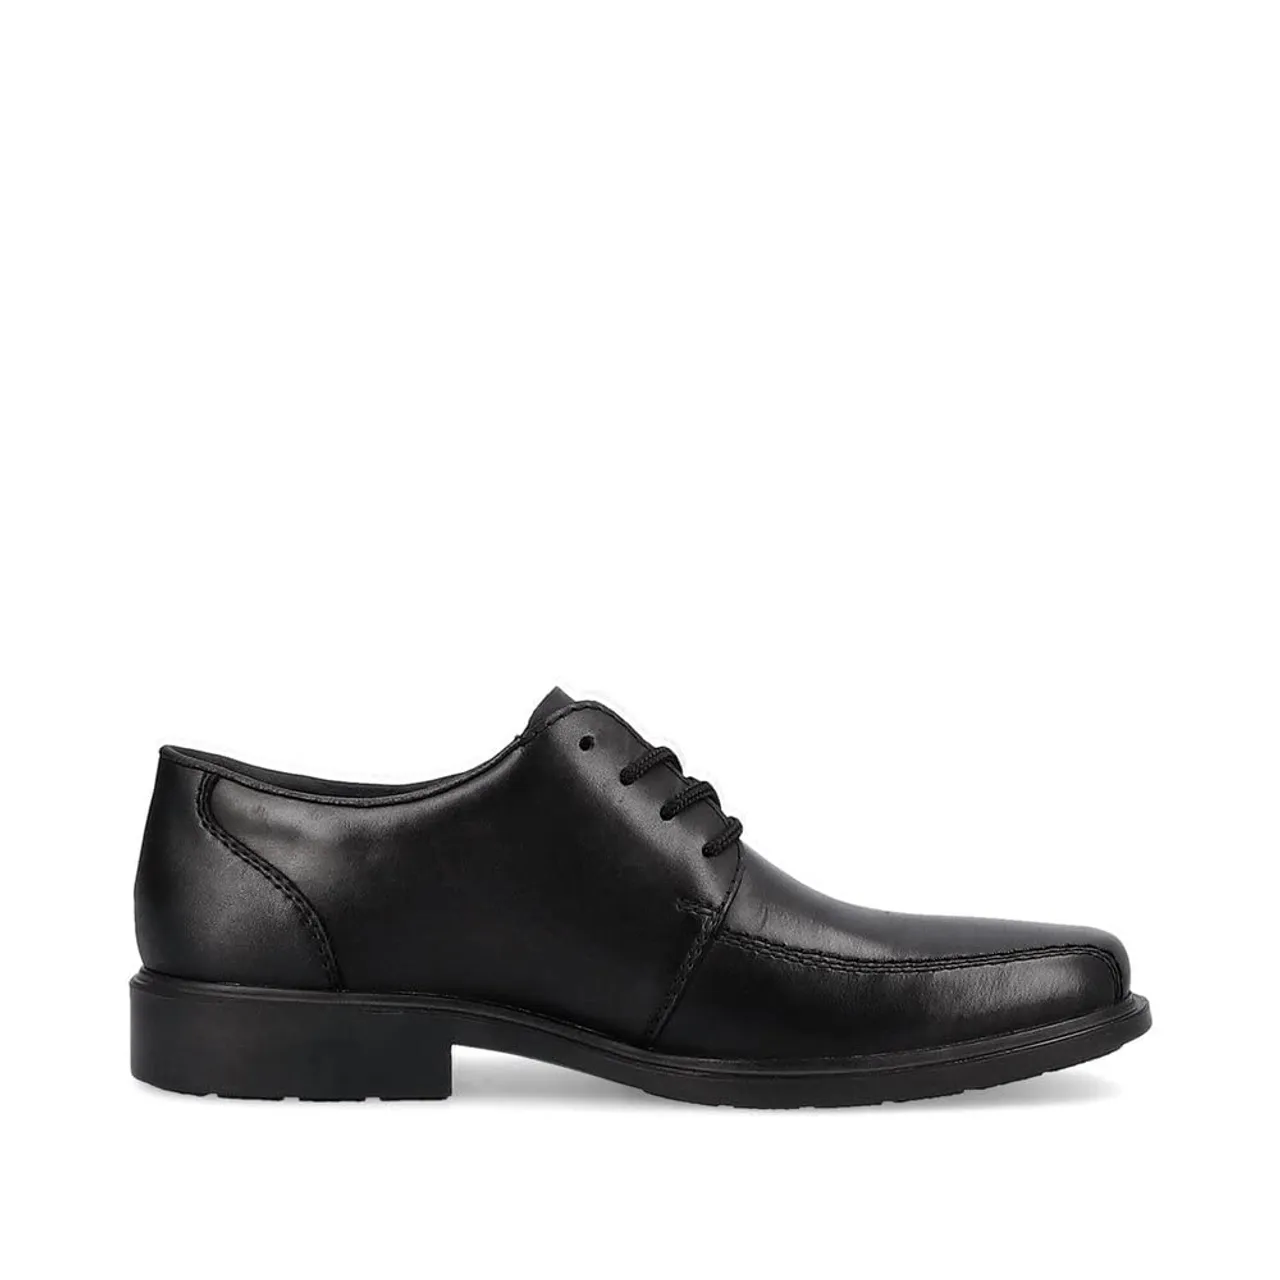 Business Schuhe schwarz